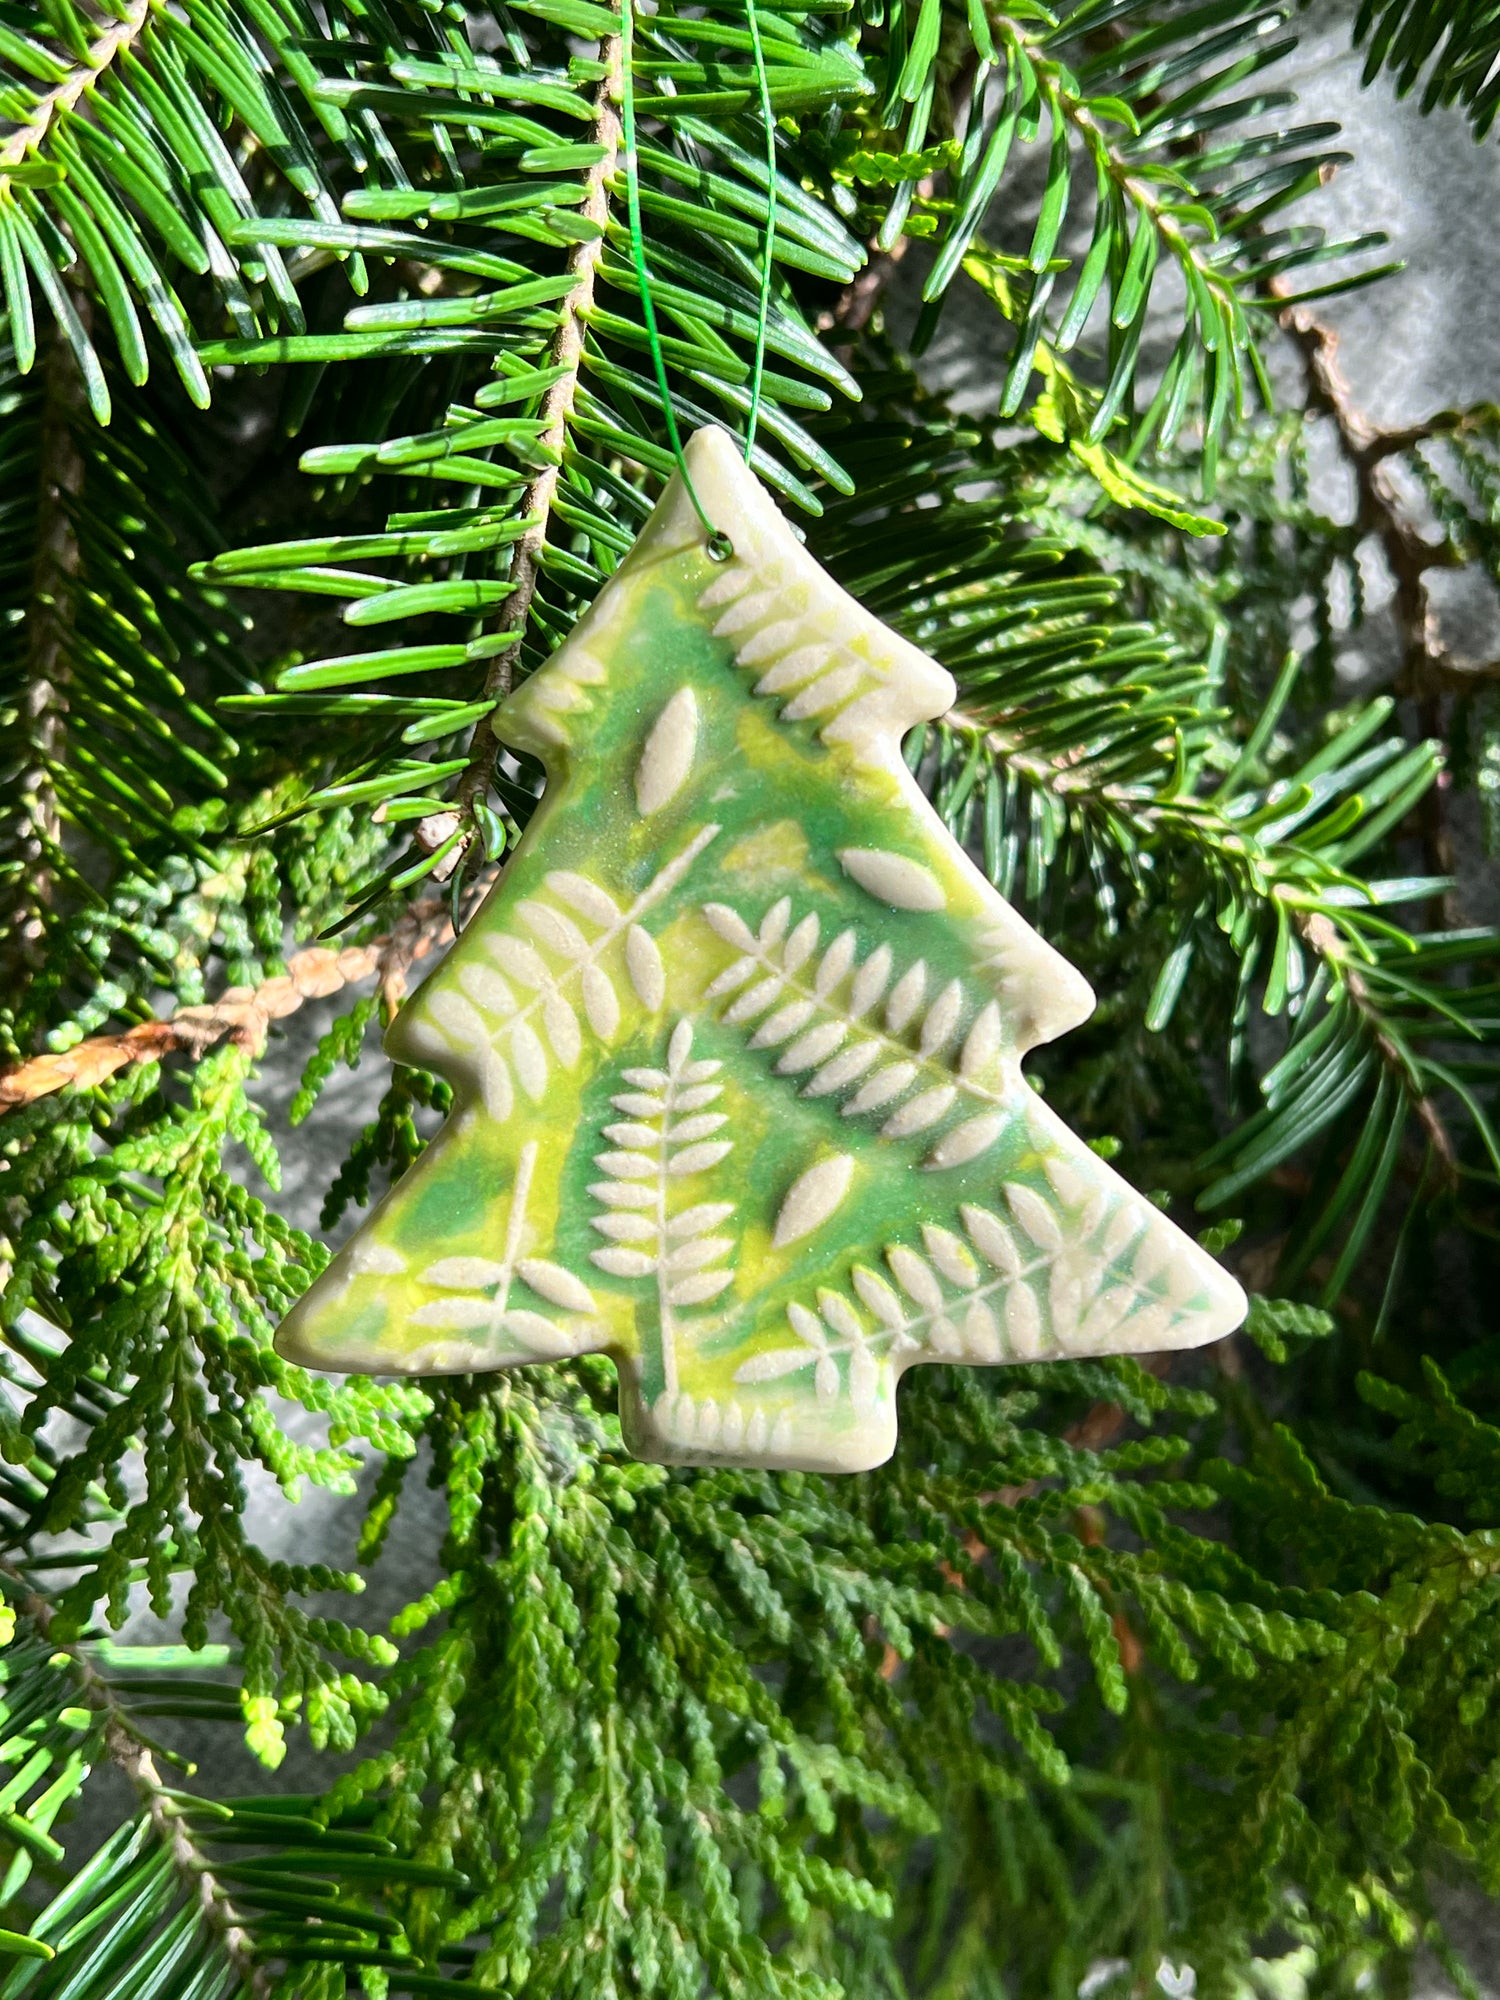 Christmas Tree Tree Ornaments